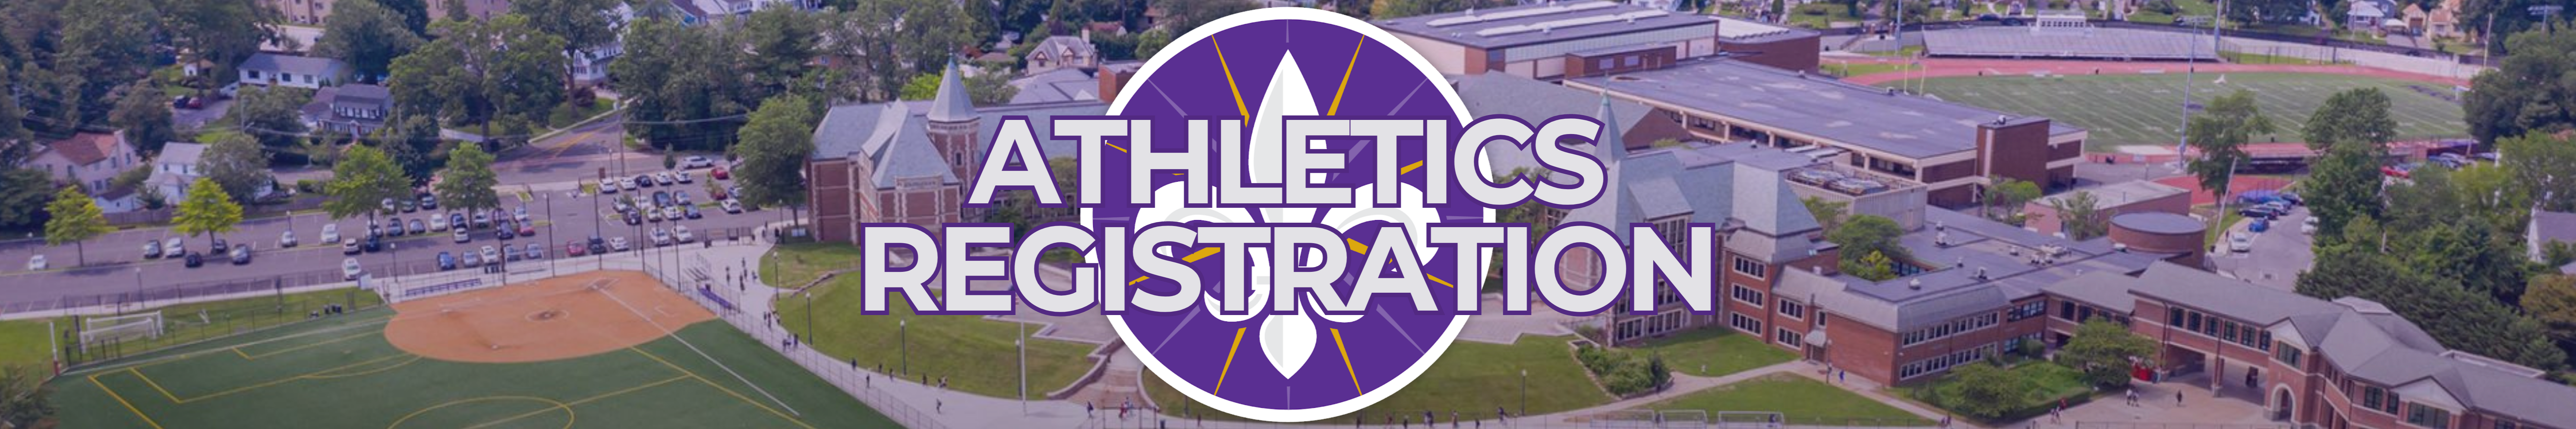 Athletics Registration banner